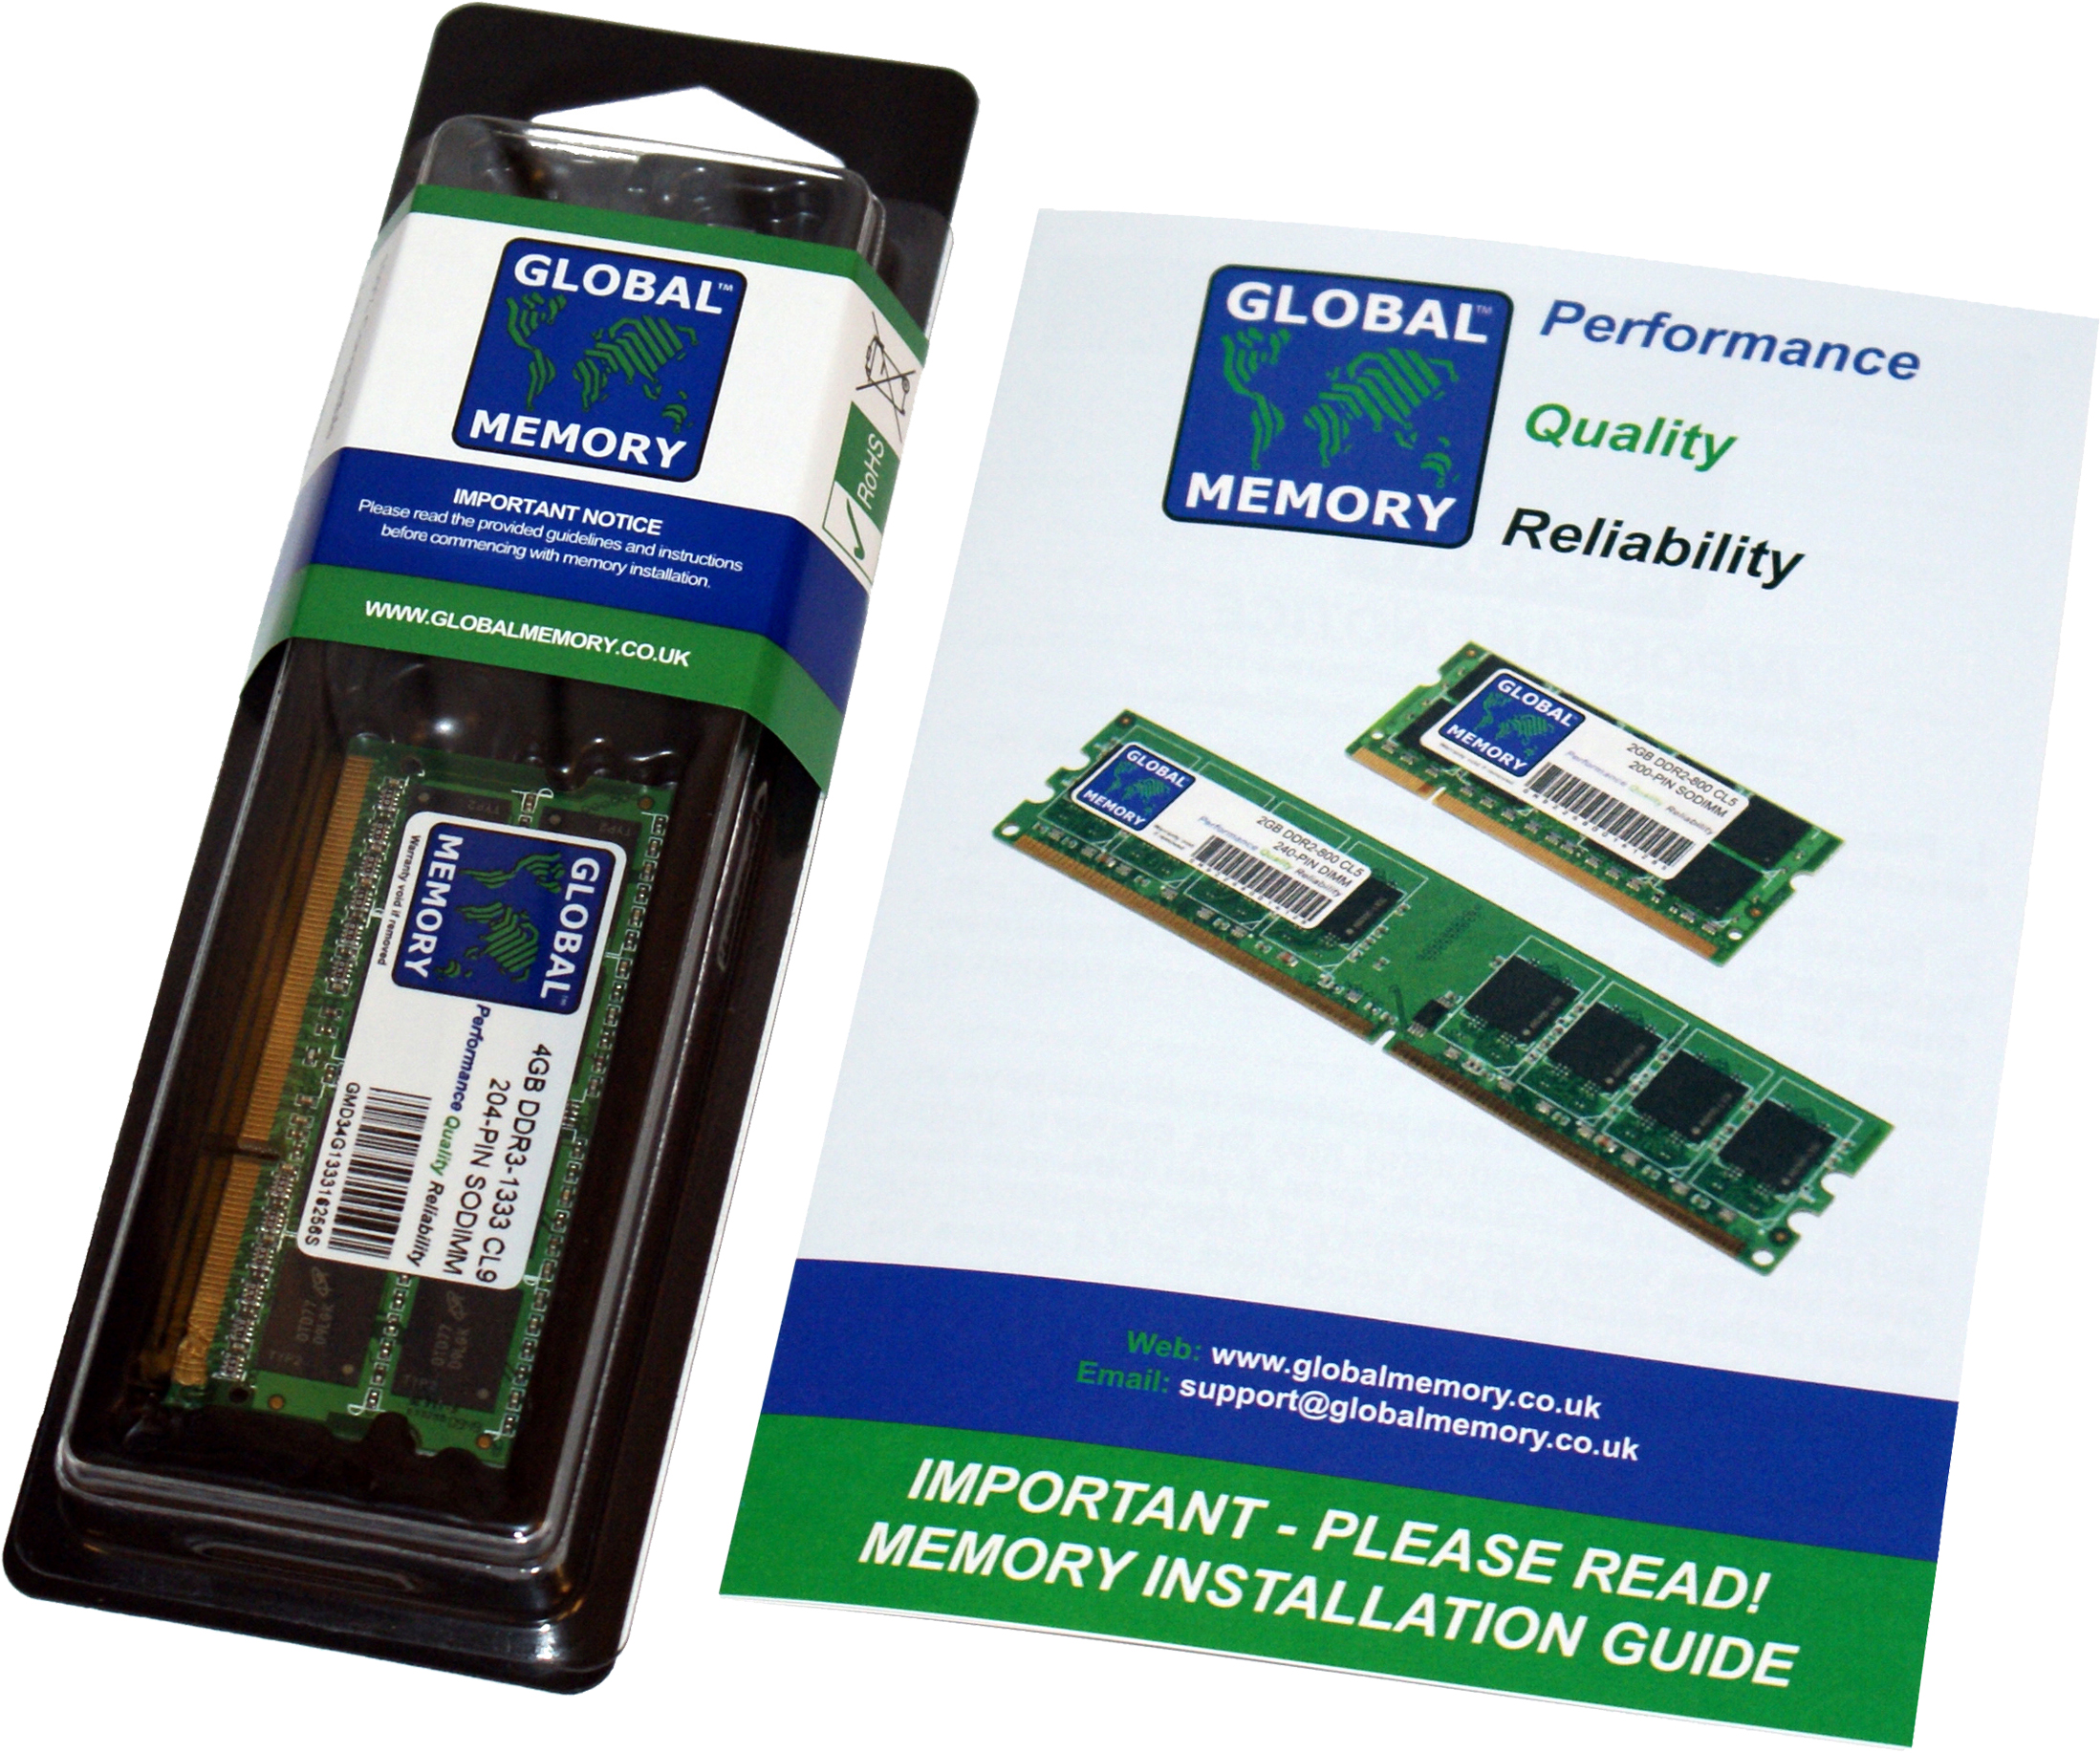 16GB DDR4 2666MHz PC4-21300 260-PIN SODIMM MEMORY RAM FOR SAMSUNG LAPTOPS/NOTEBOOKS